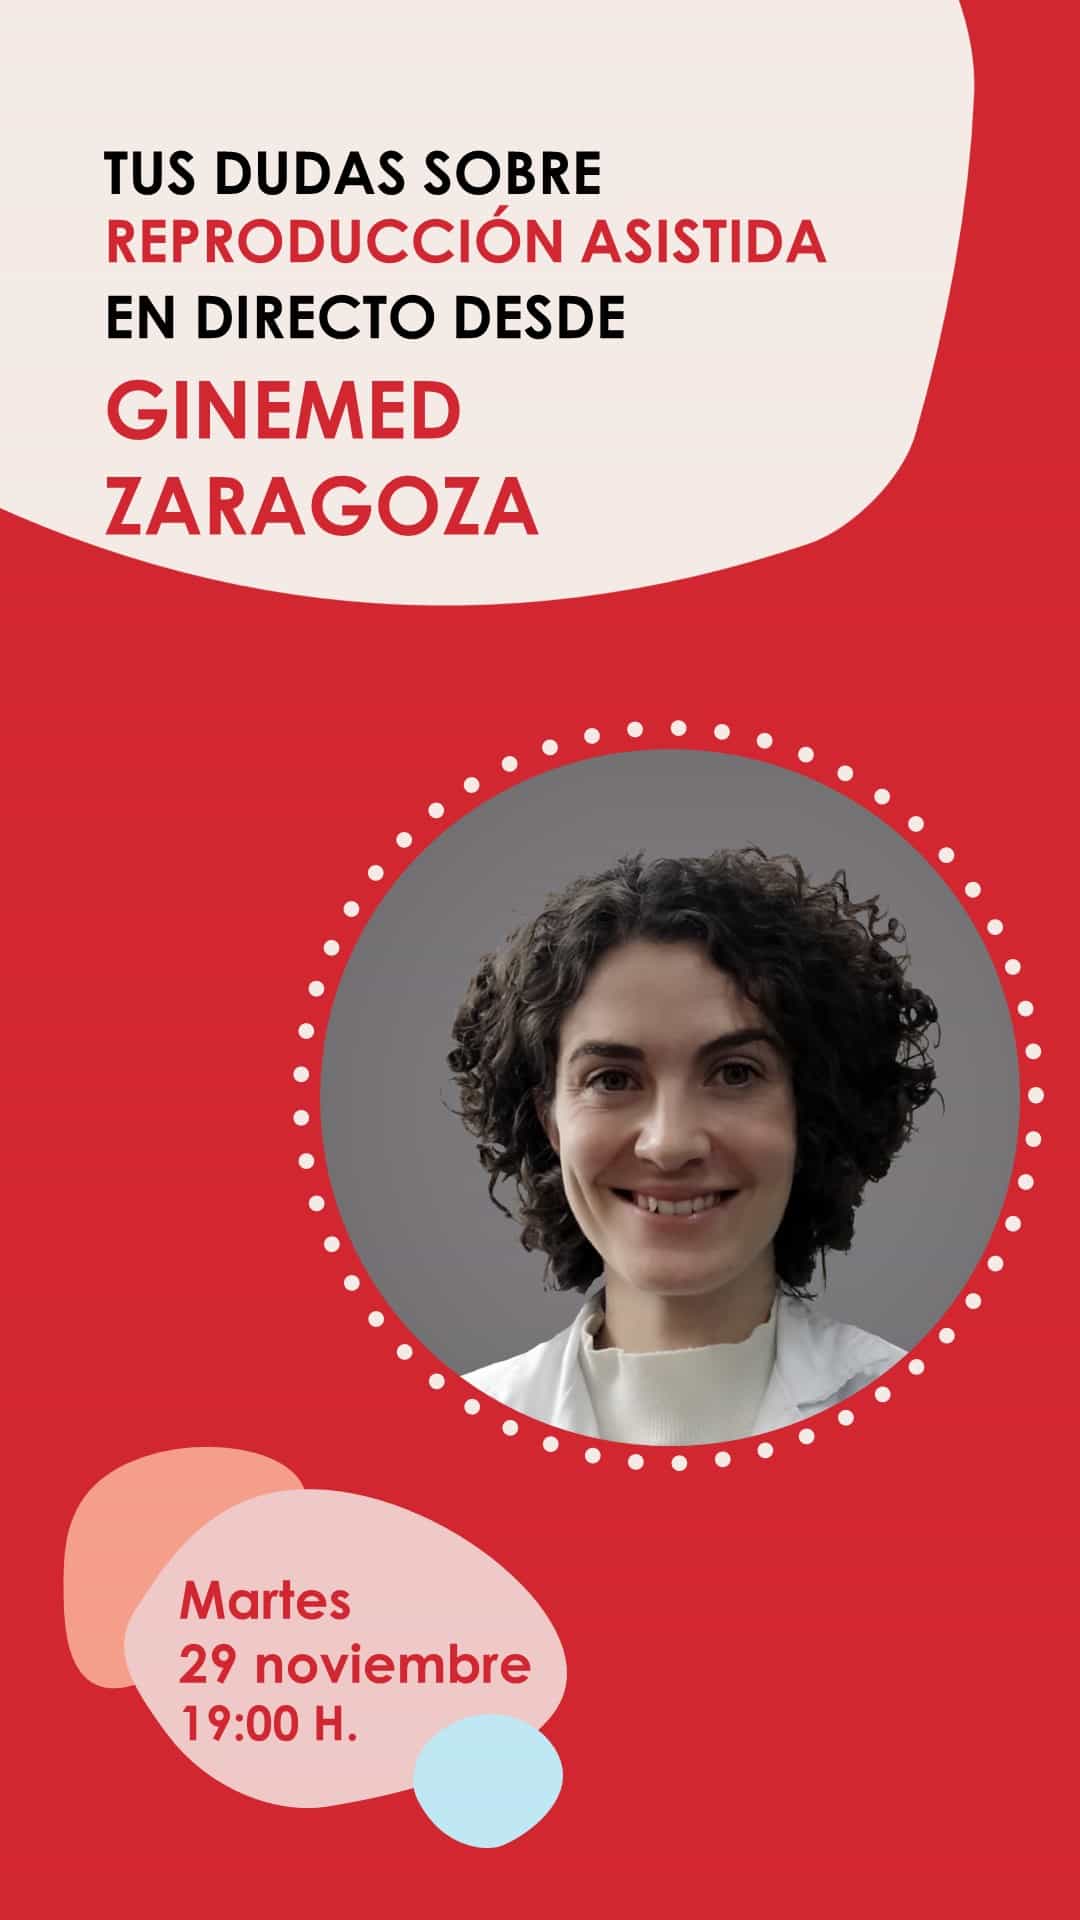 Instagram Live con la Dra. Esther Moreno de Ginemed Zaragoza